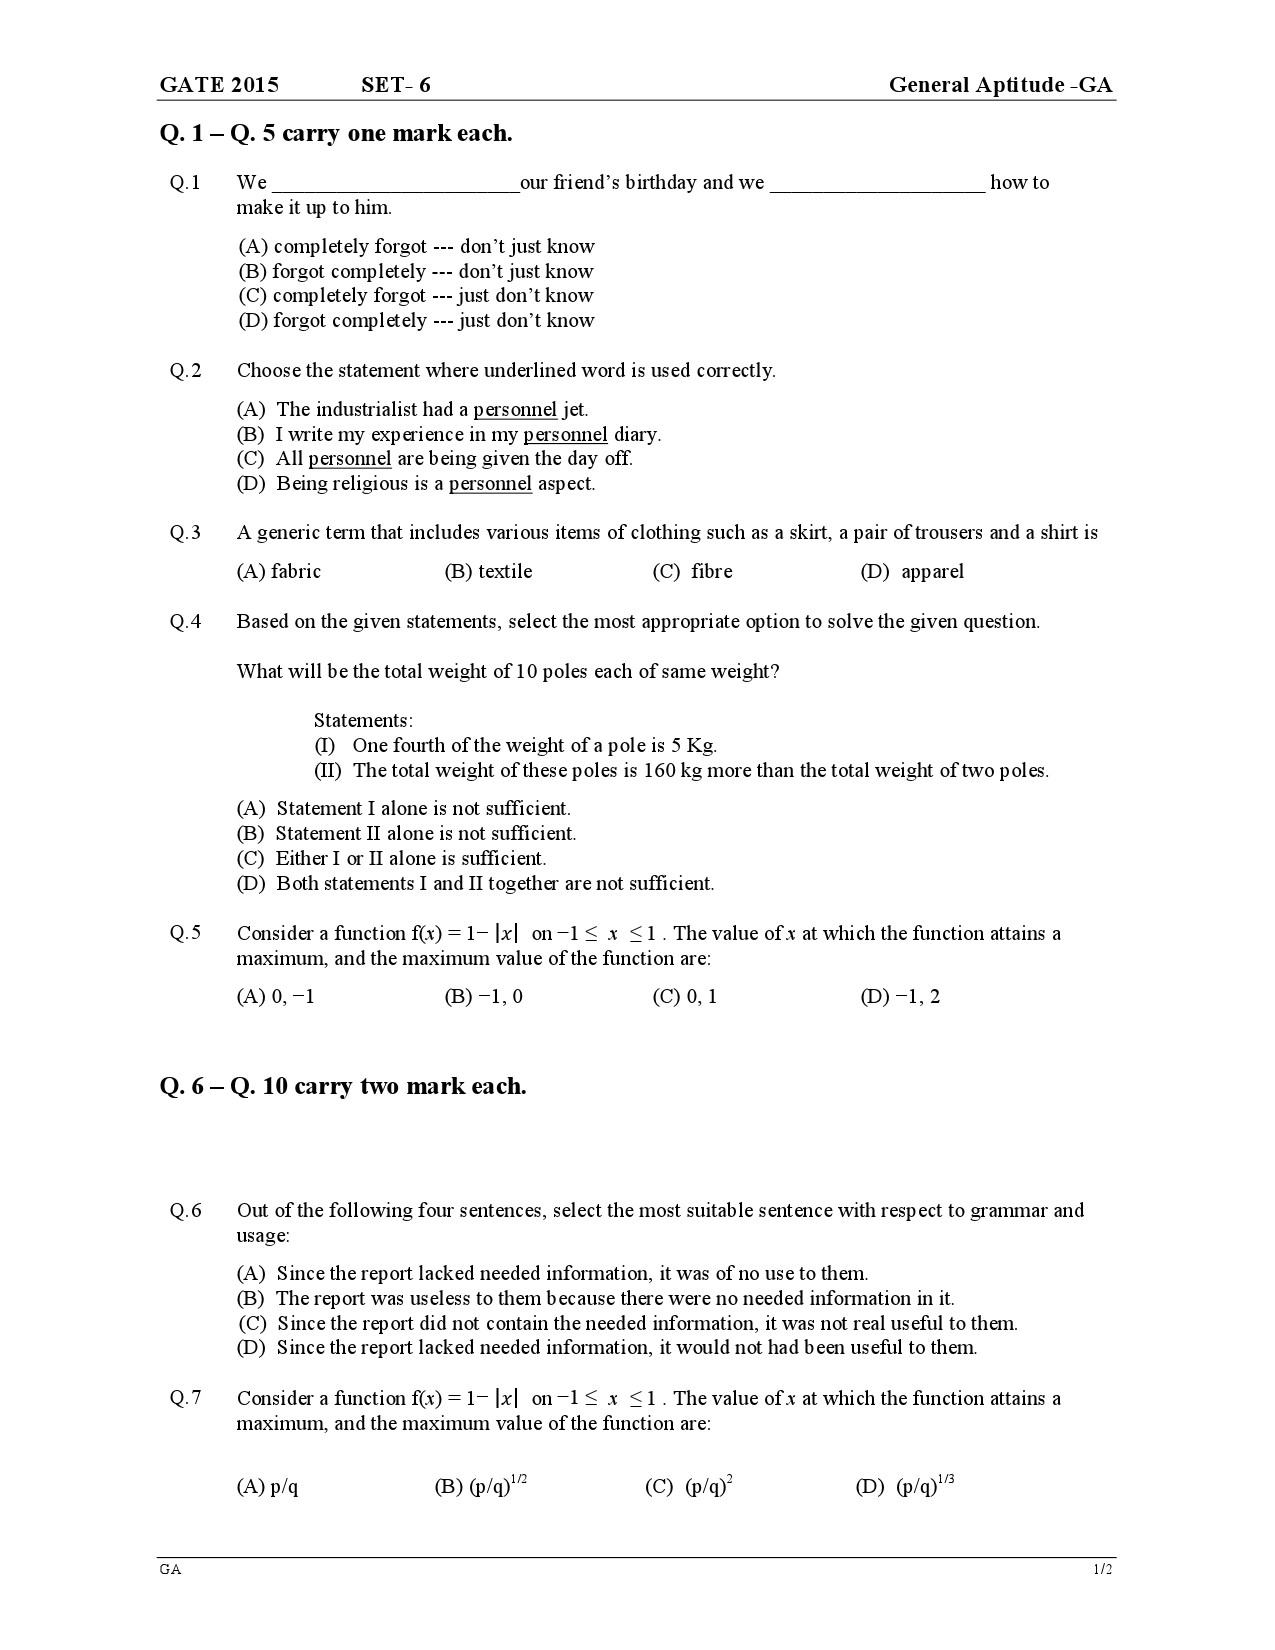 GATE Exam Question Paper 2015 General Aptitude 12